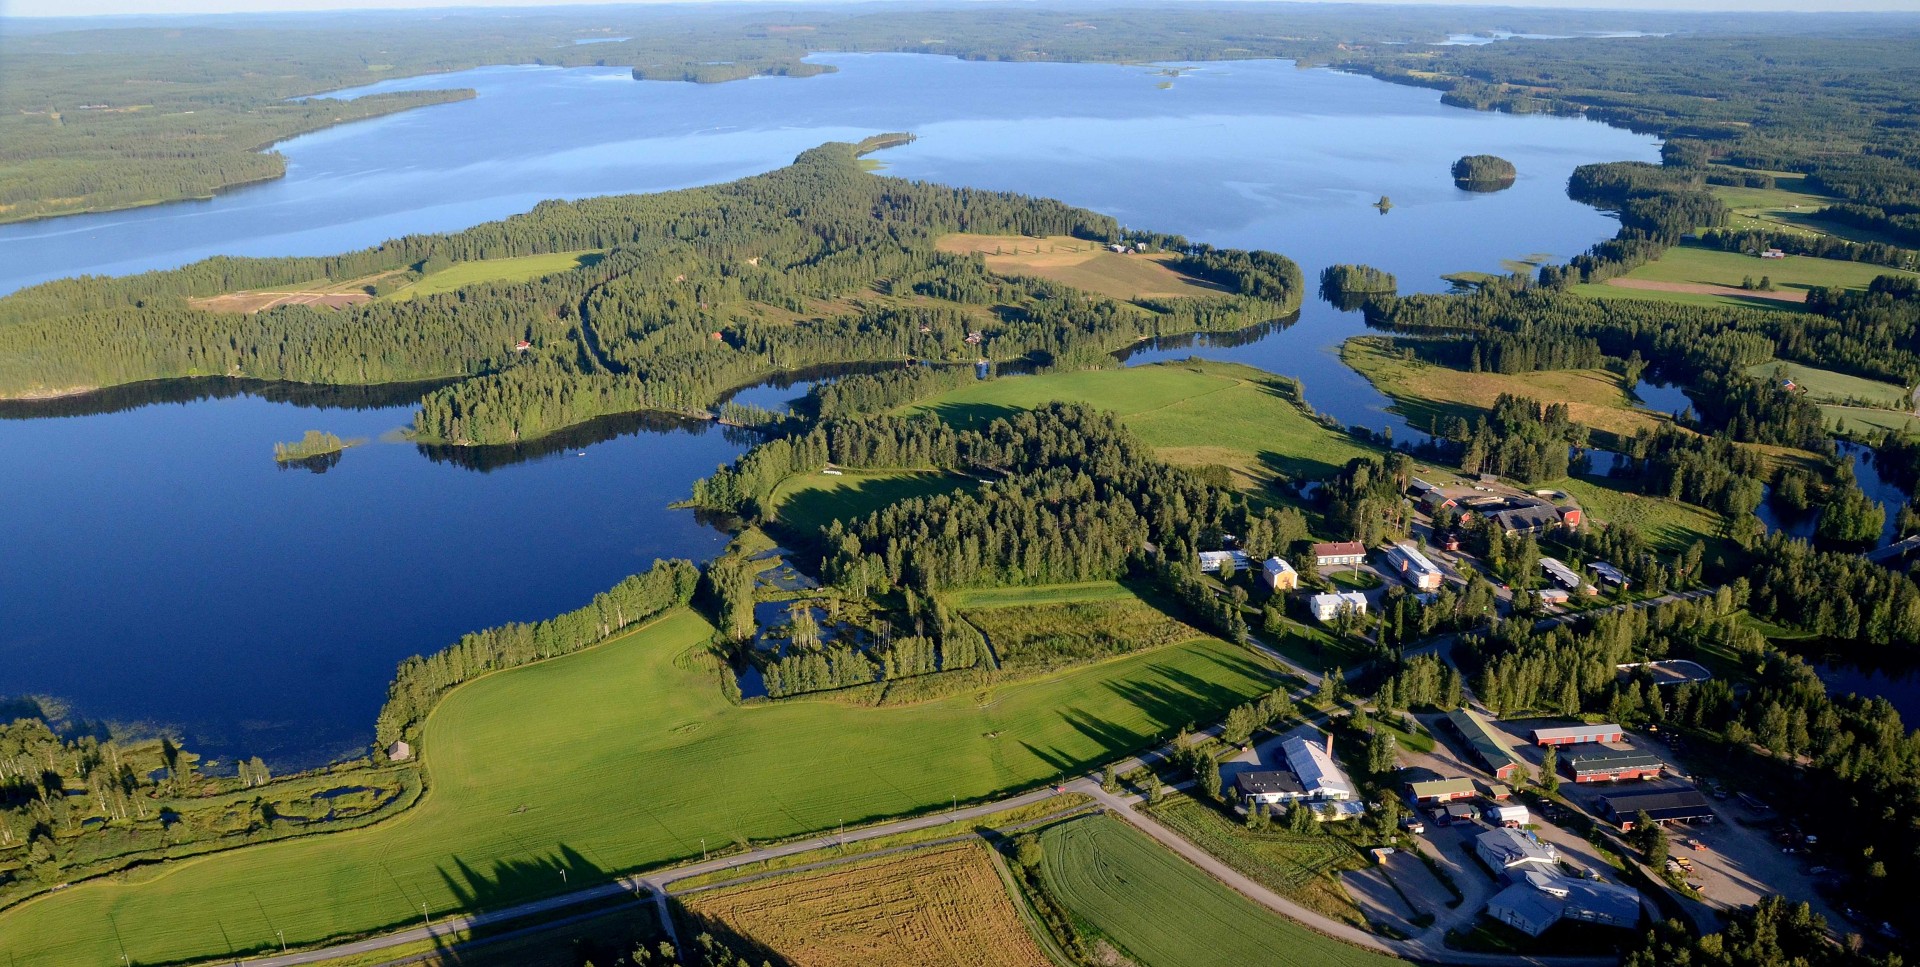 Республика тысячи озер. Озеро Сайма Финляндия. Финляндия Страна 1000 озер. Озерное плато Финляндии. Озерный ландшафт Финляндии.